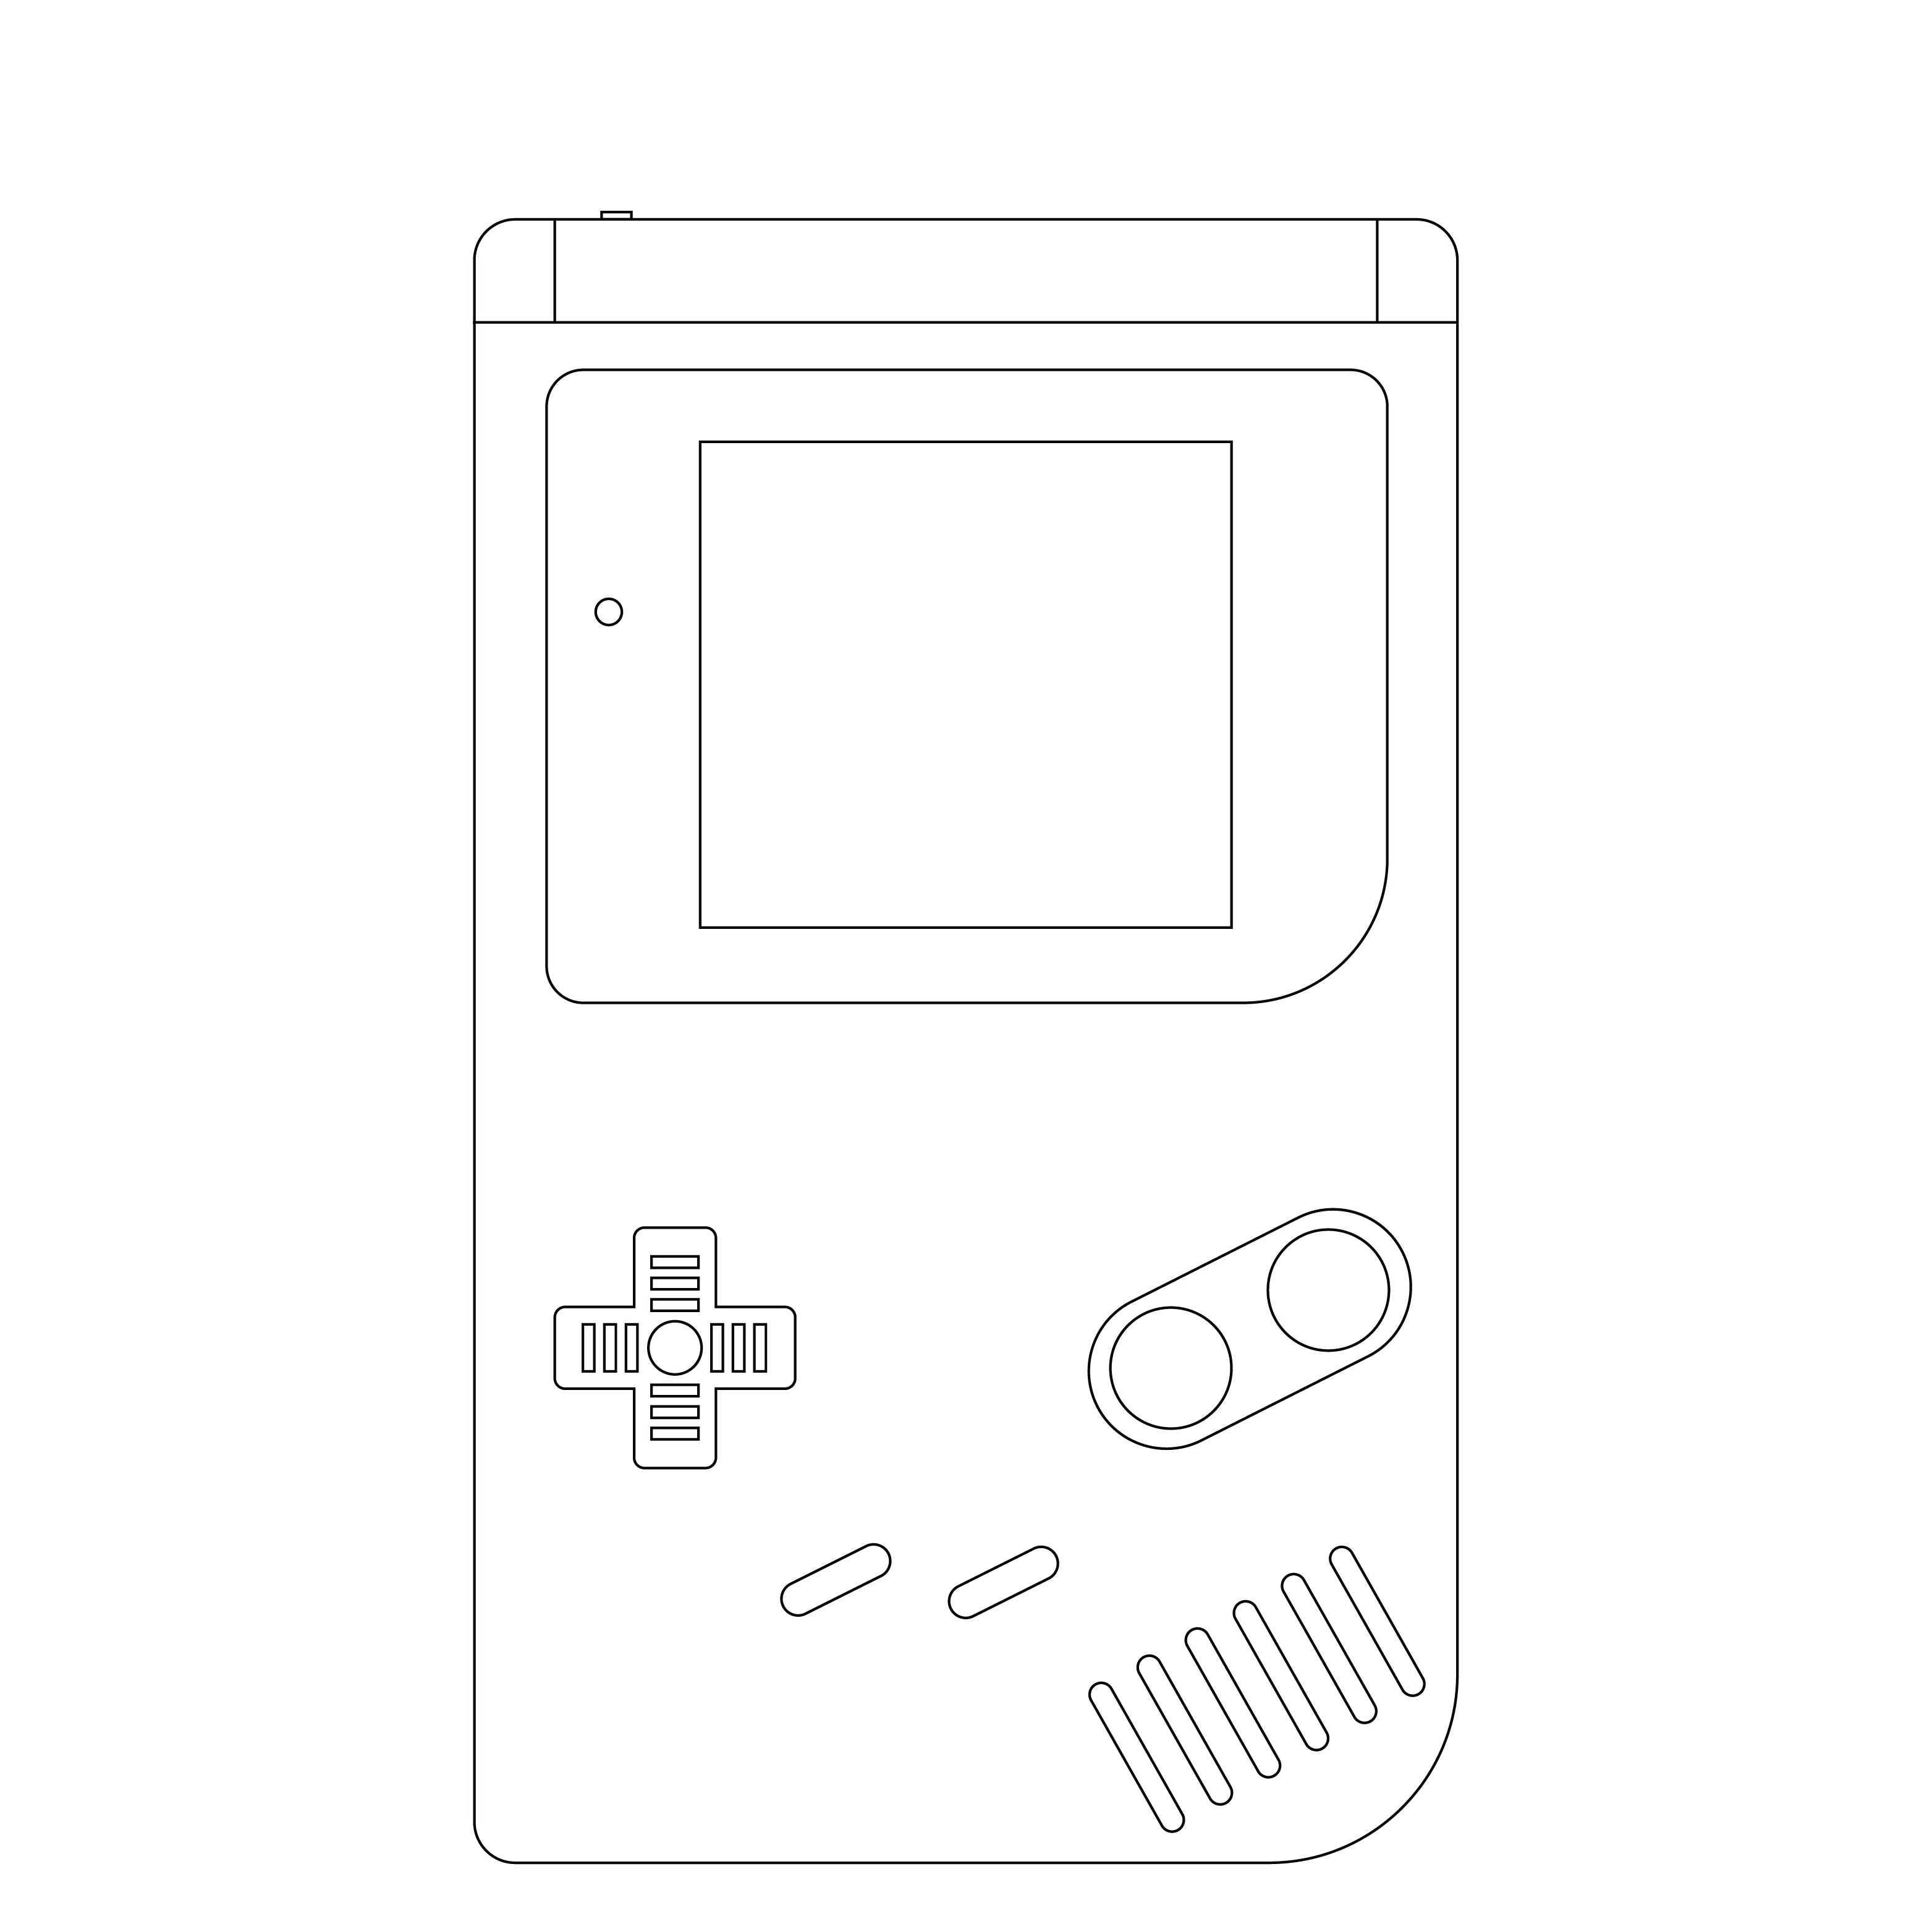 outline of original style game boy handheld